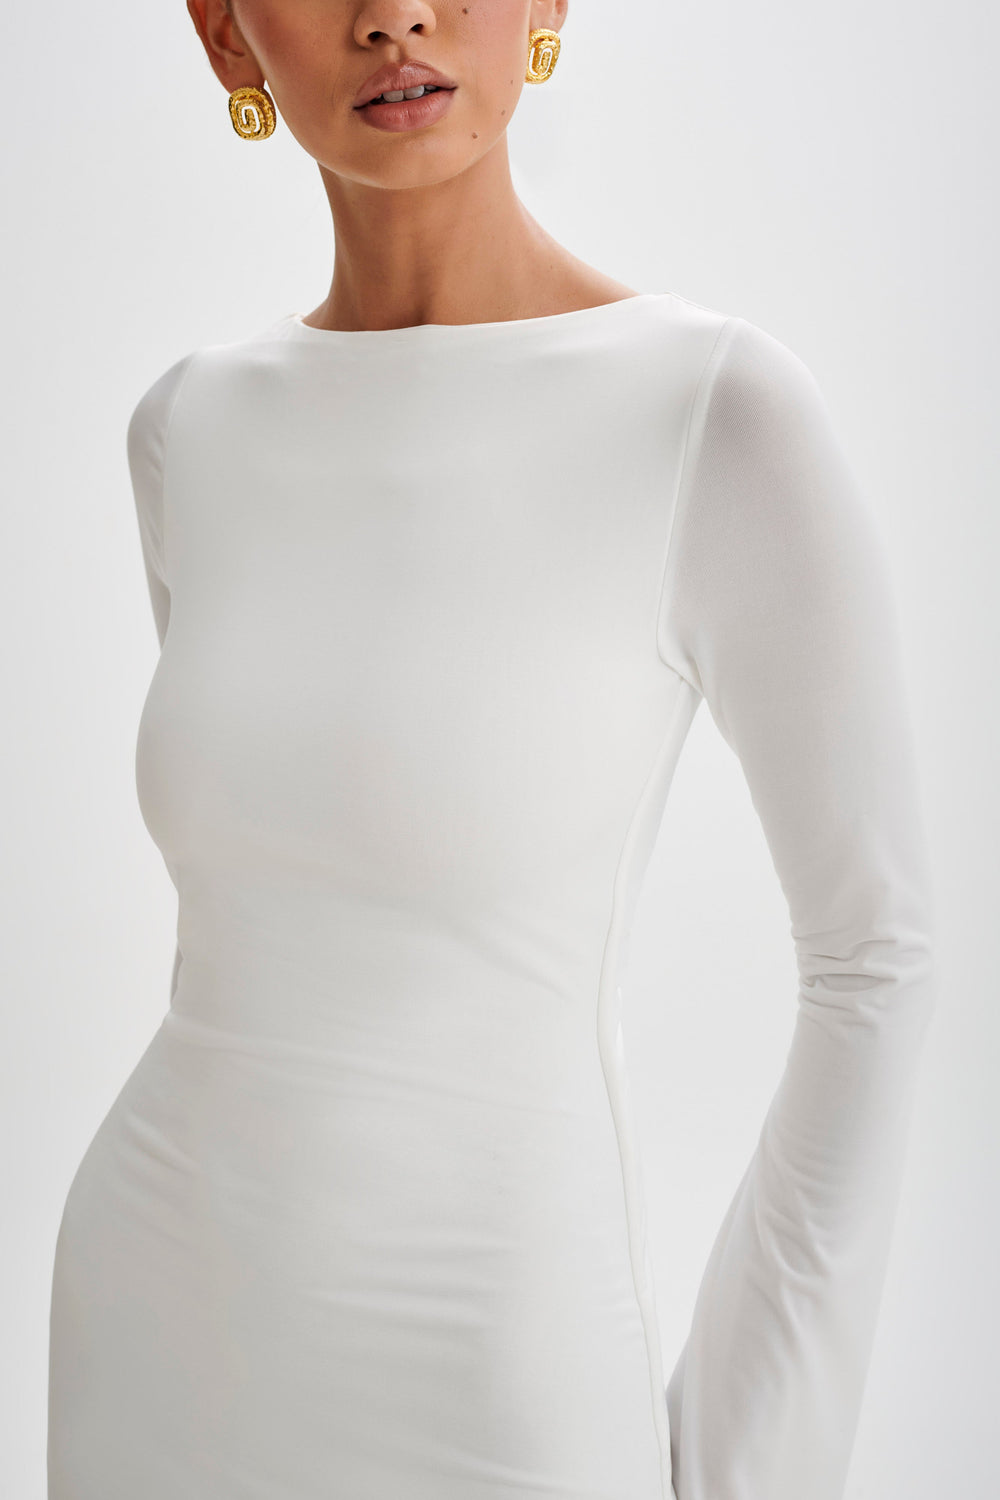 Tarna Slinky A-Line Mini Dress - White